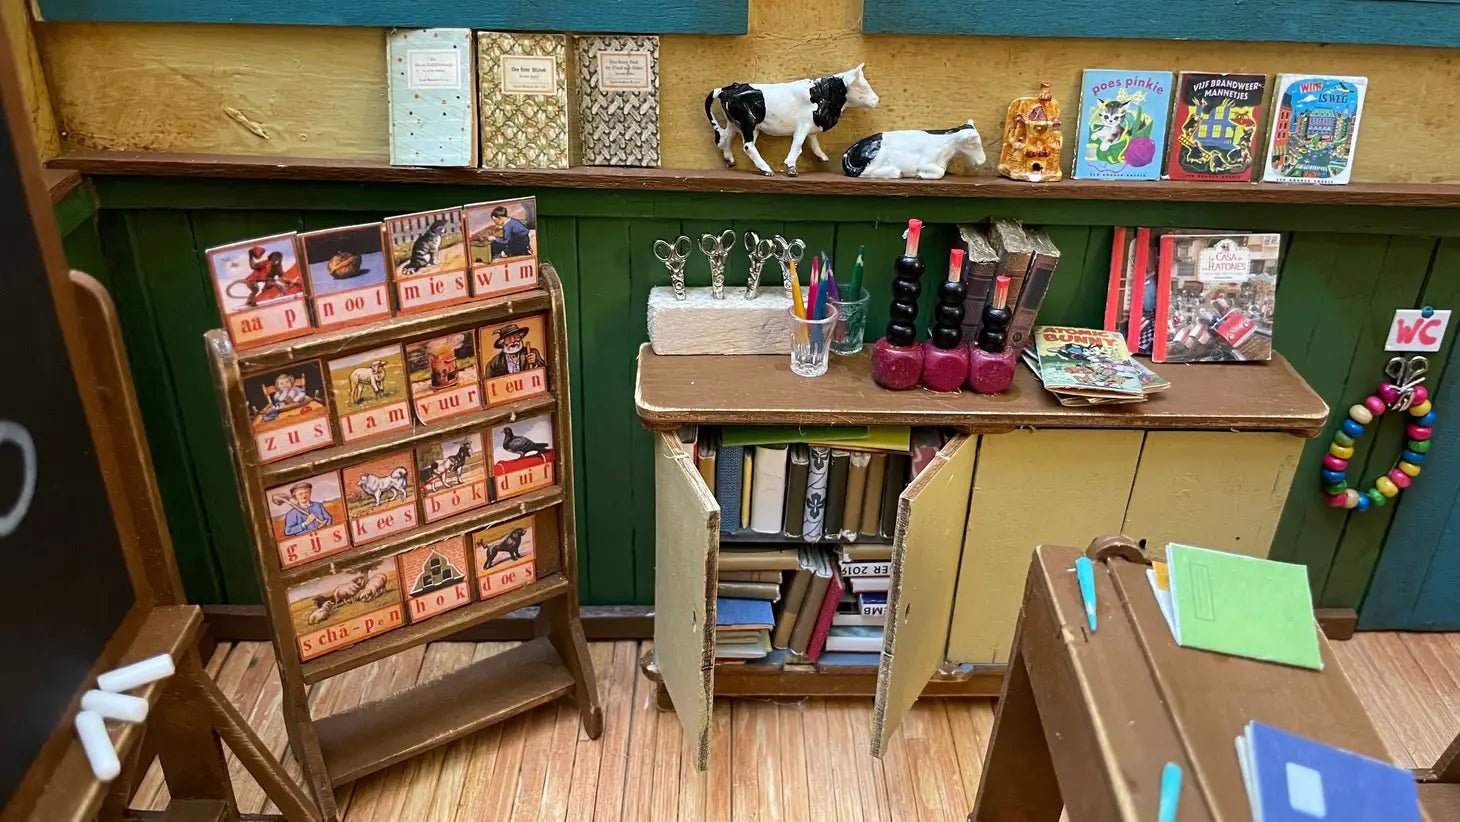 Het Muizenhuis - Kids Diy Dollhouse Furniture Kit - Classroom (Scale 1:12) - Playlaan